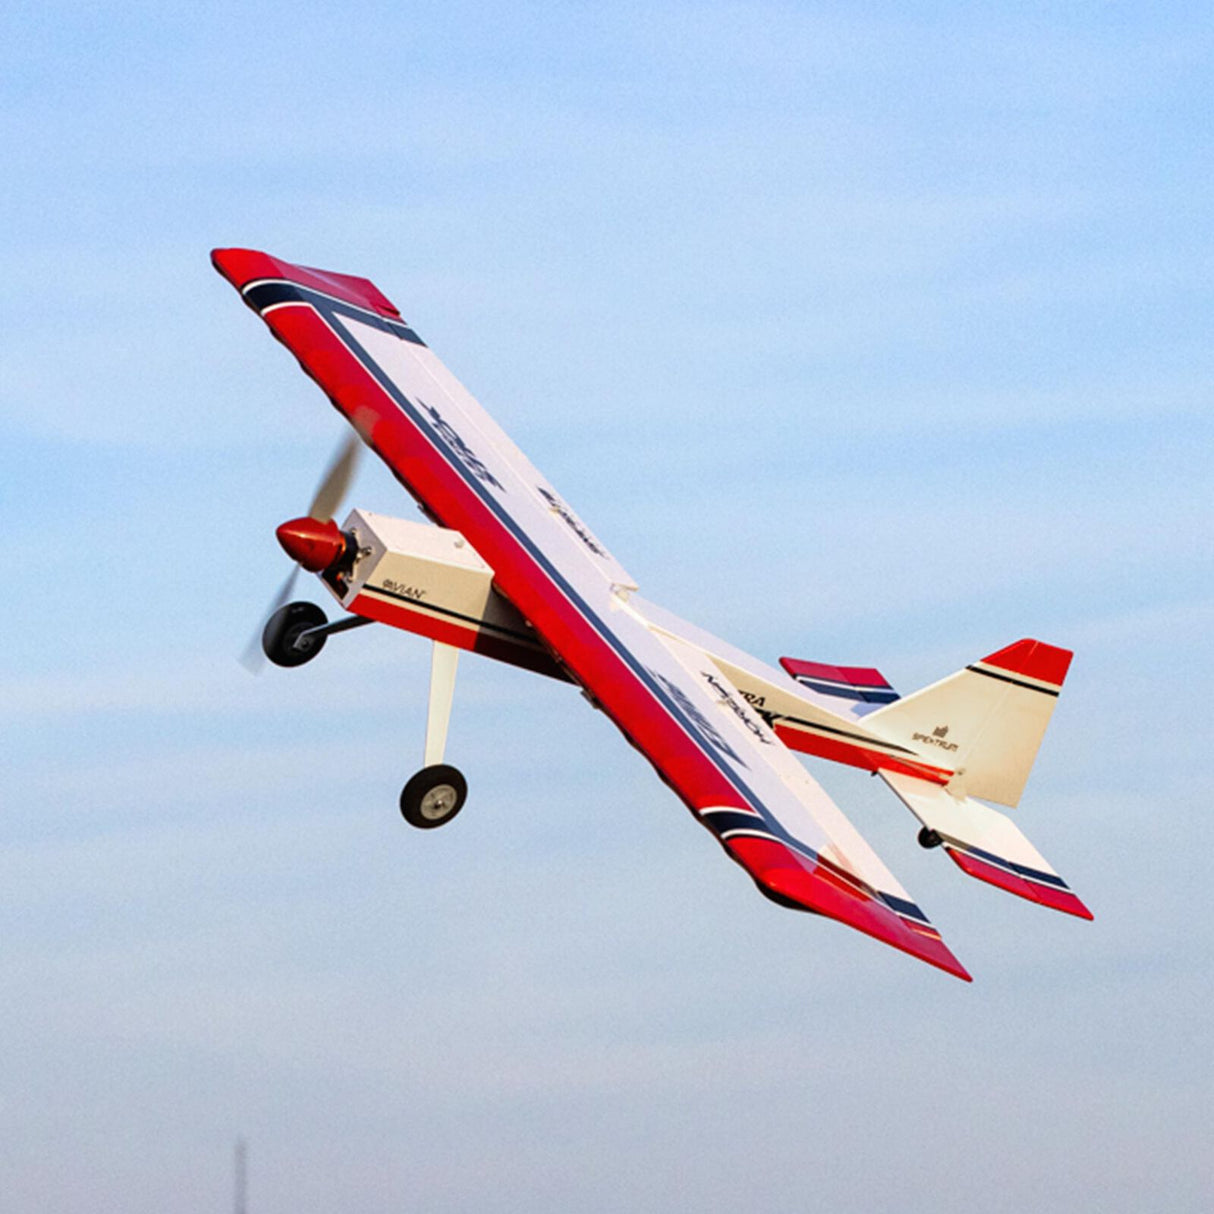 E-Flite Ultra Stick 1.1m BNF Basic RC Plane [EFL14050] - Hobbytech Toys